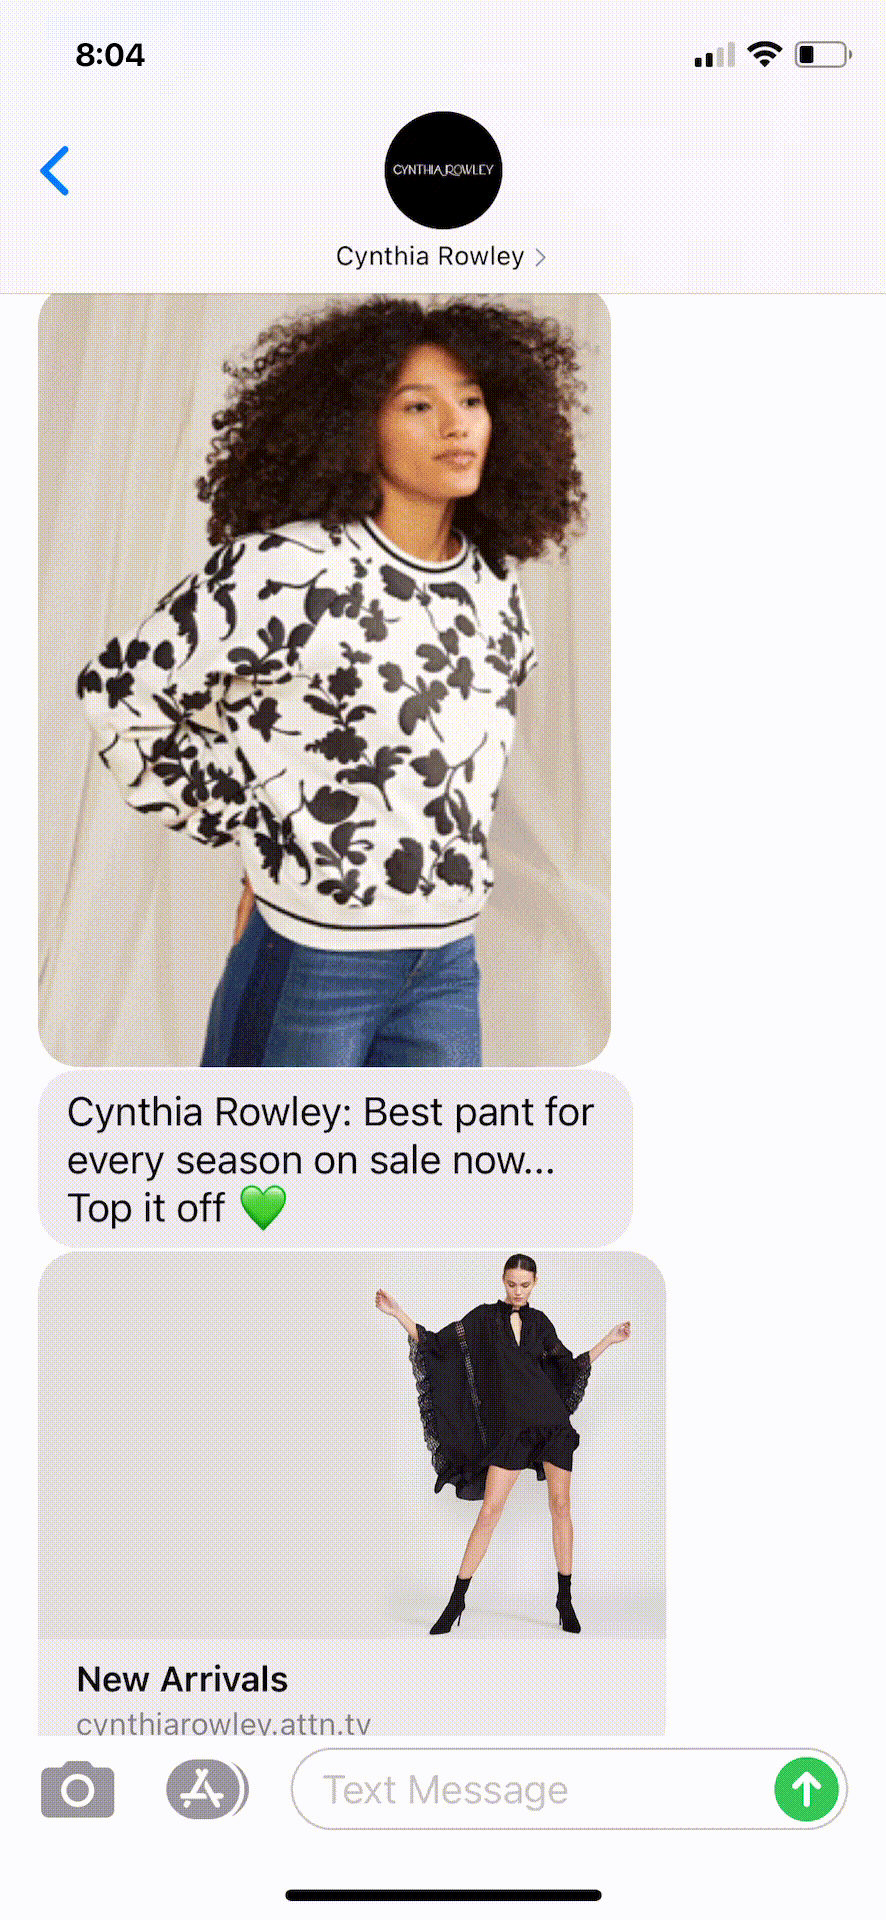 Cynthia-Rowley-Text-Message-Marketing-Example-03.15.2021